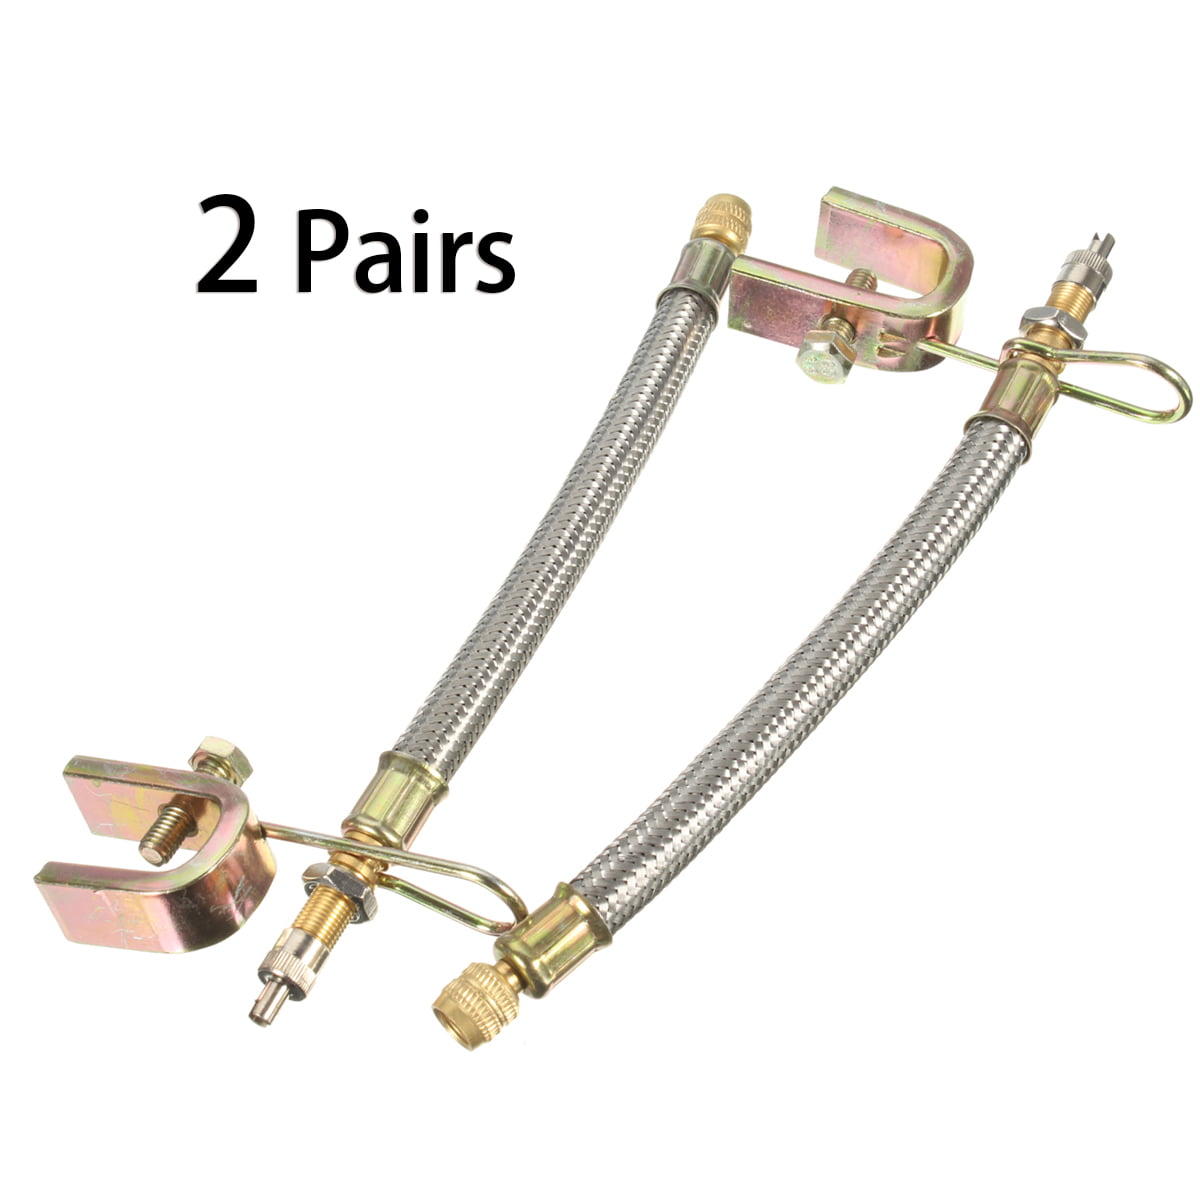 valve stem extenders for dual wheels